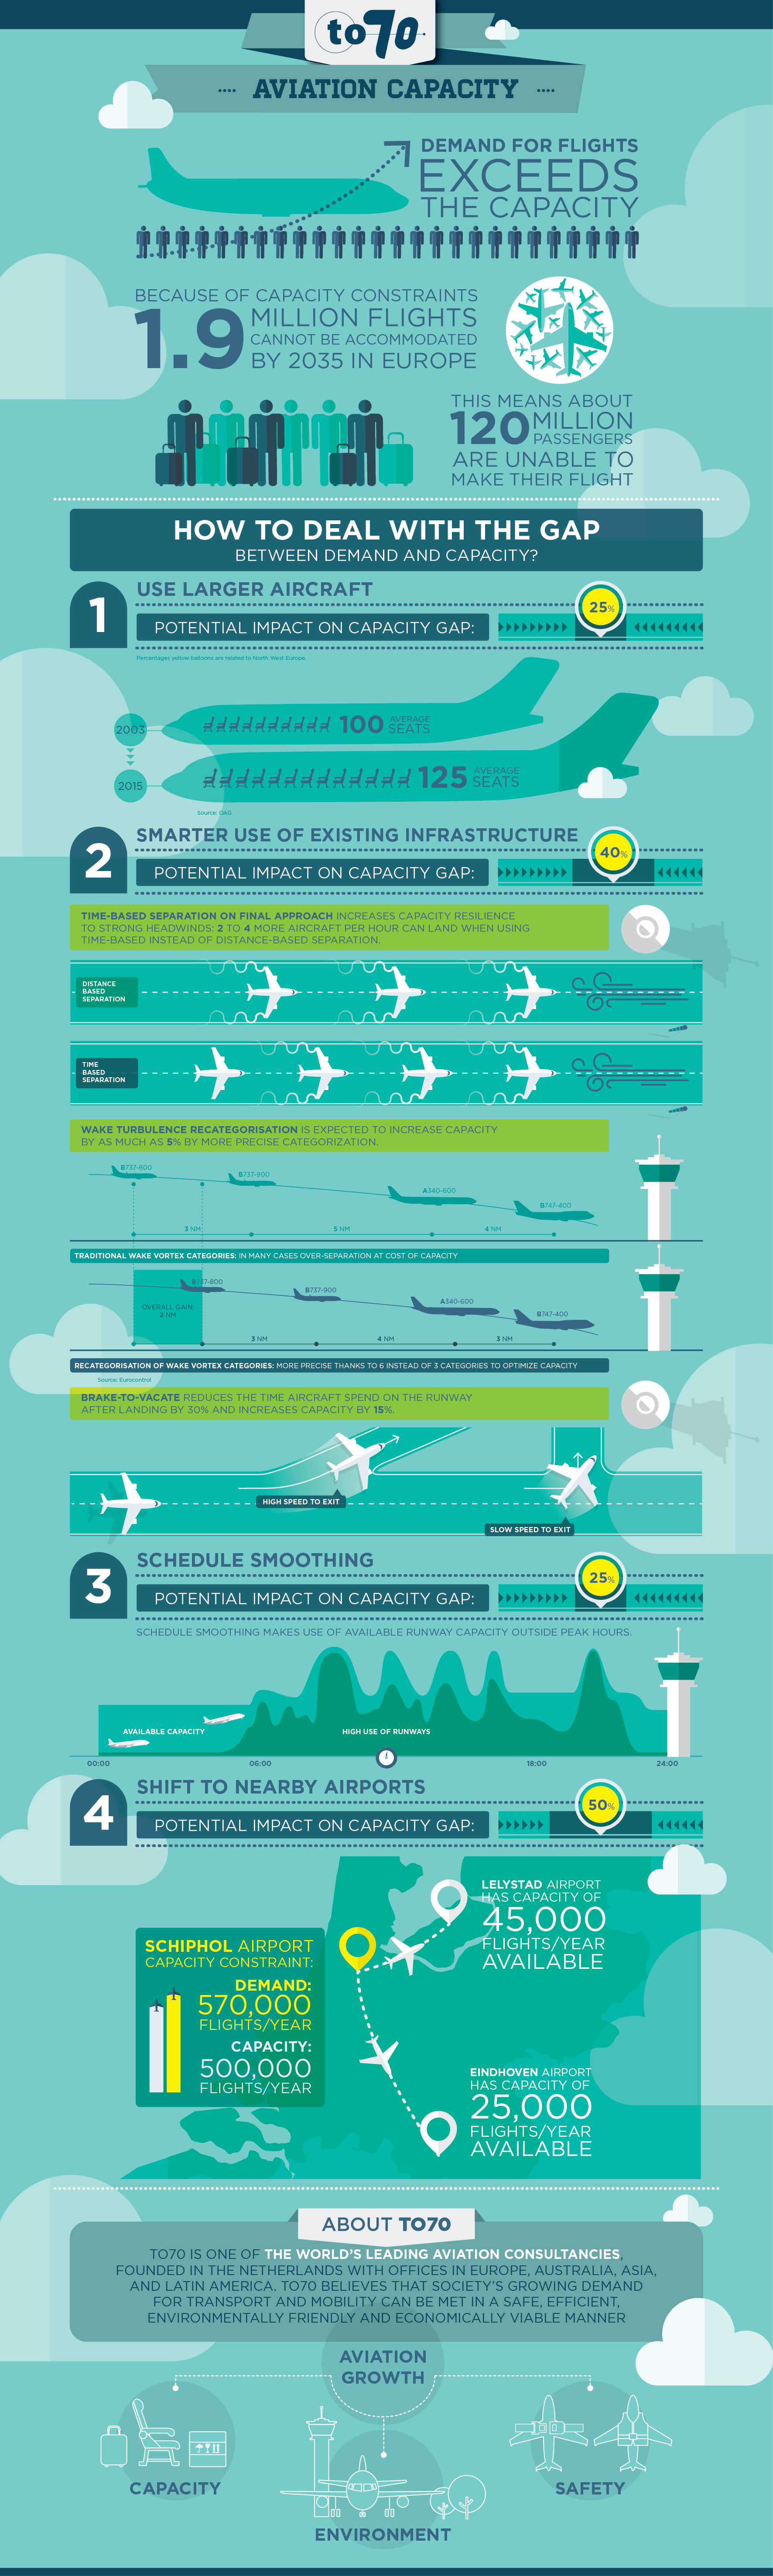 infographic Aviation Capacity